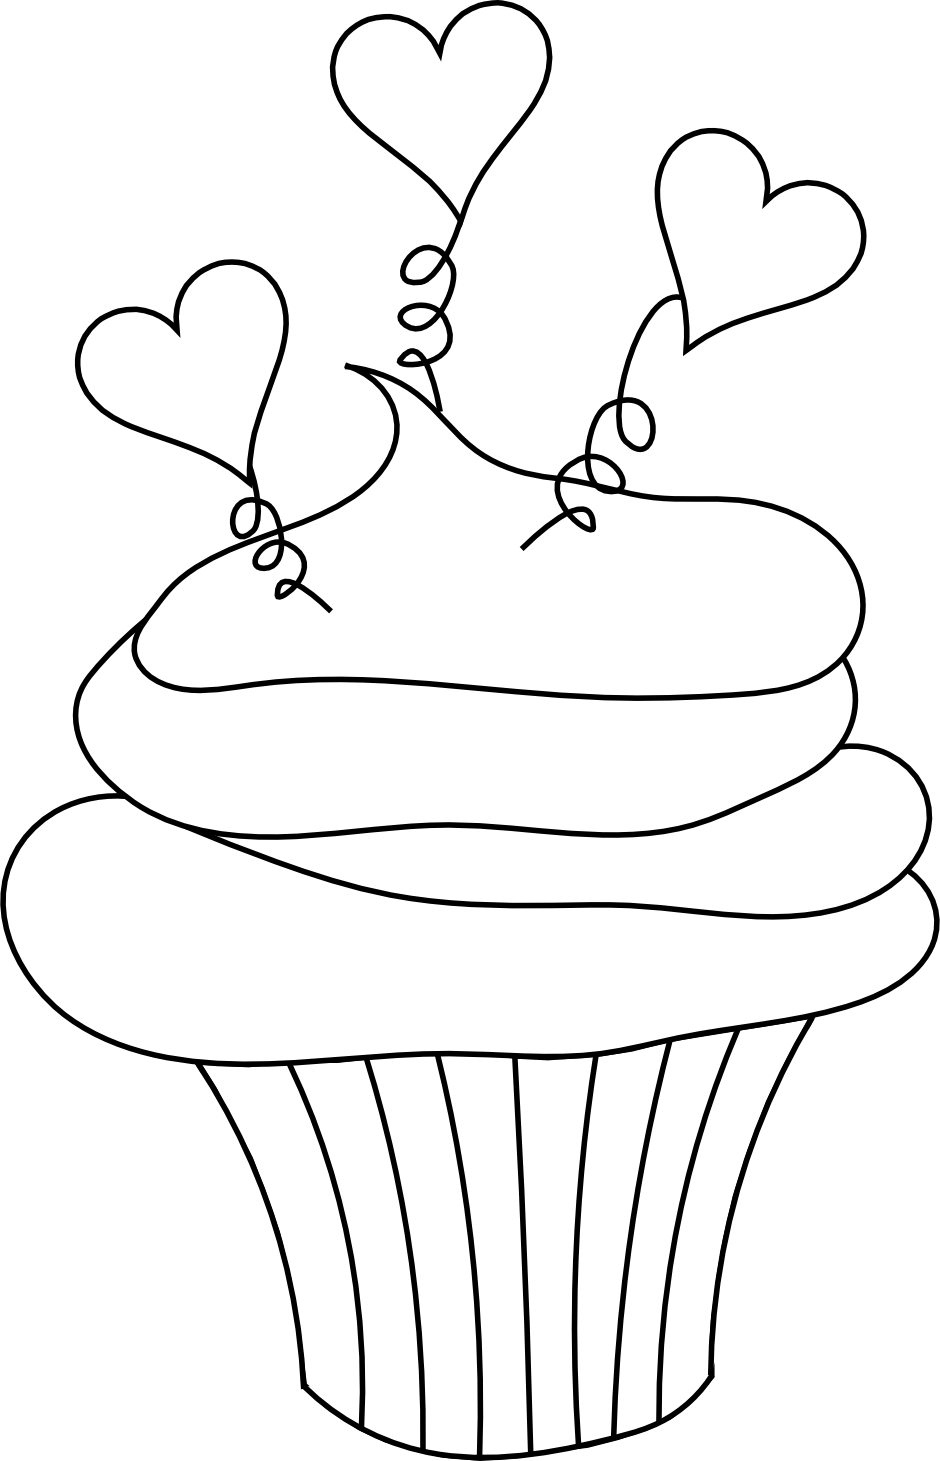 free black and white cupcake clipart - photo #26